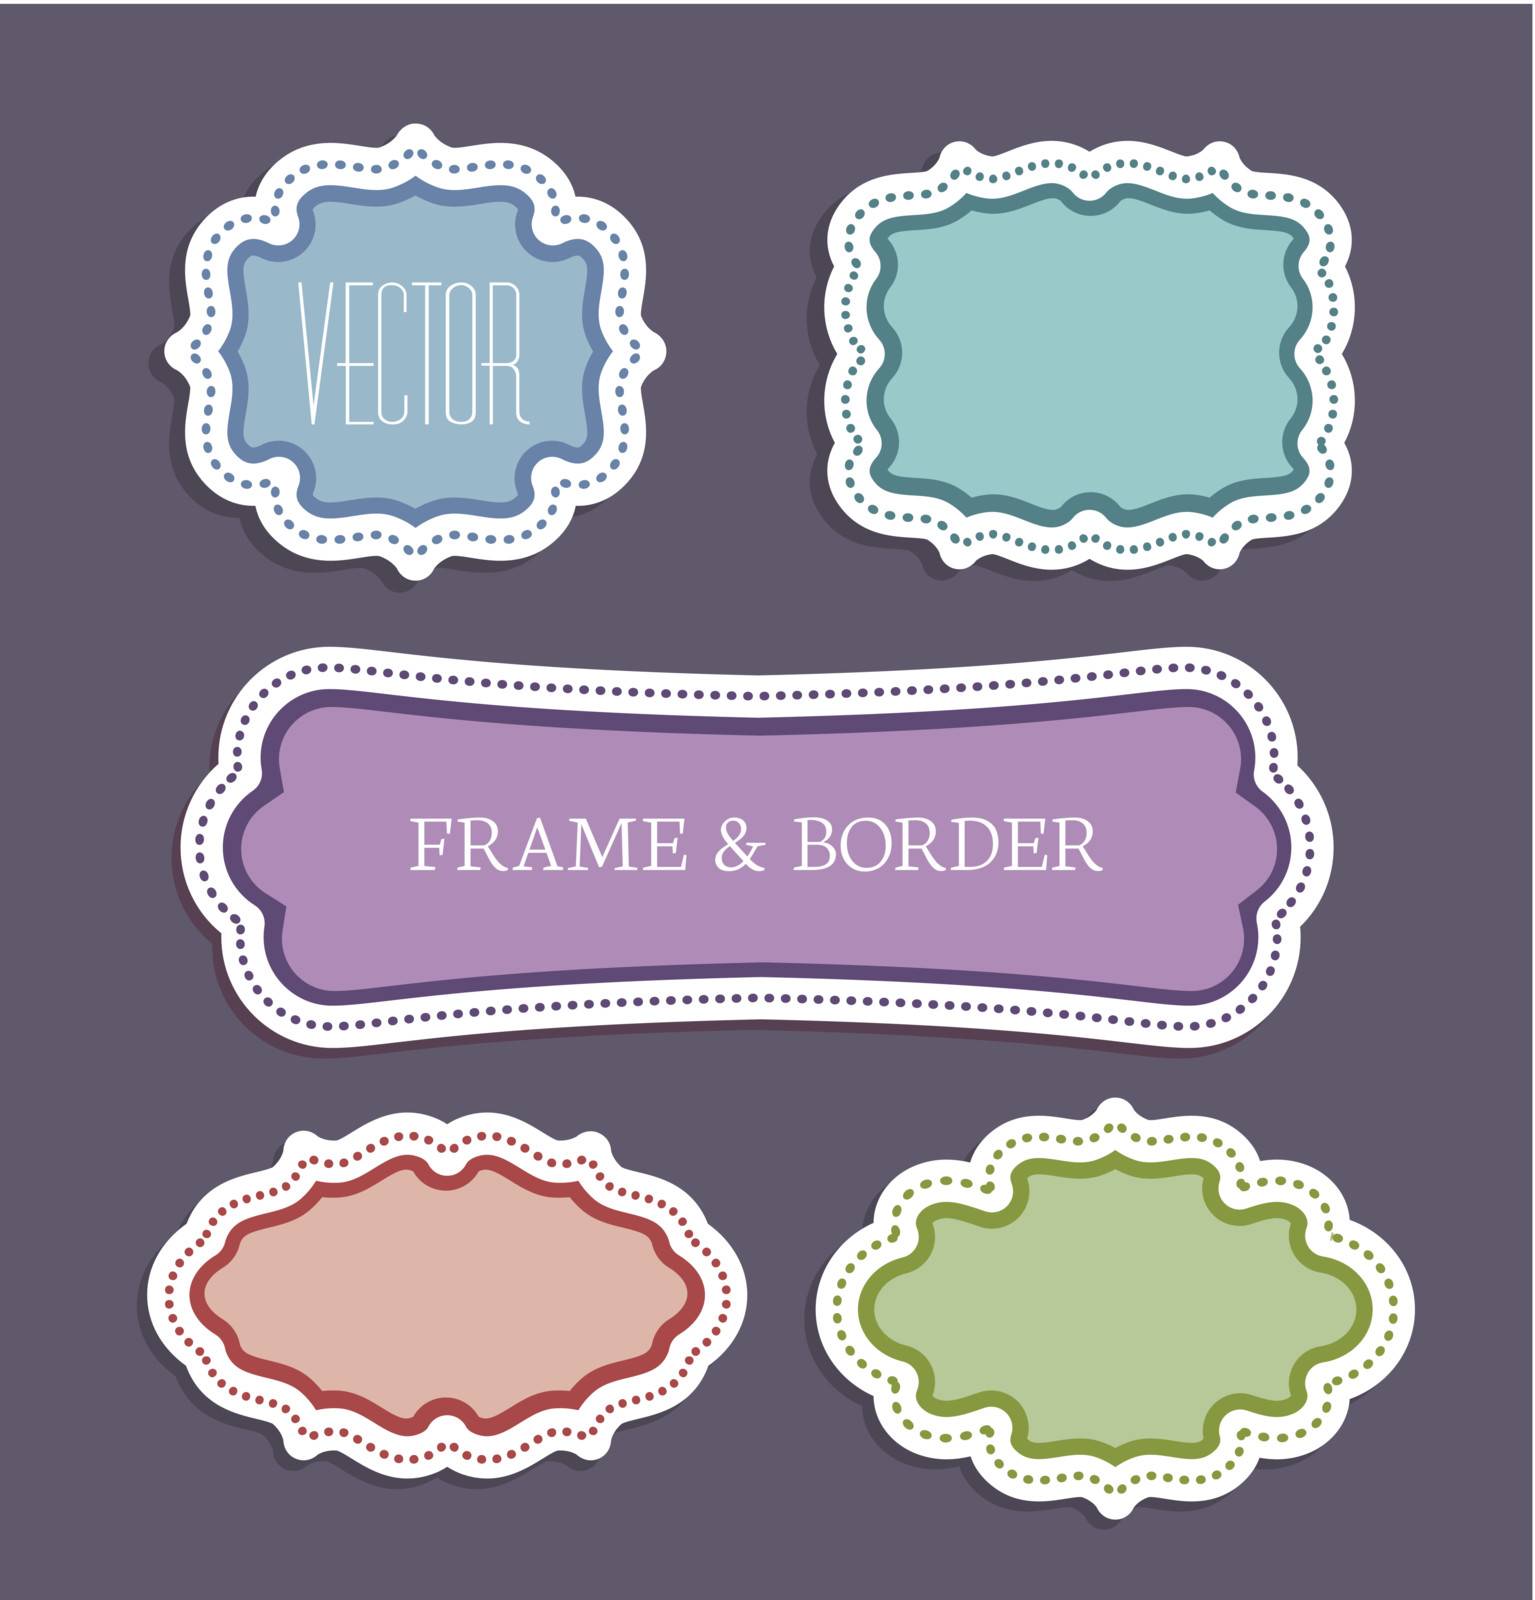 Vector illustration of a decorative colorful frame set 